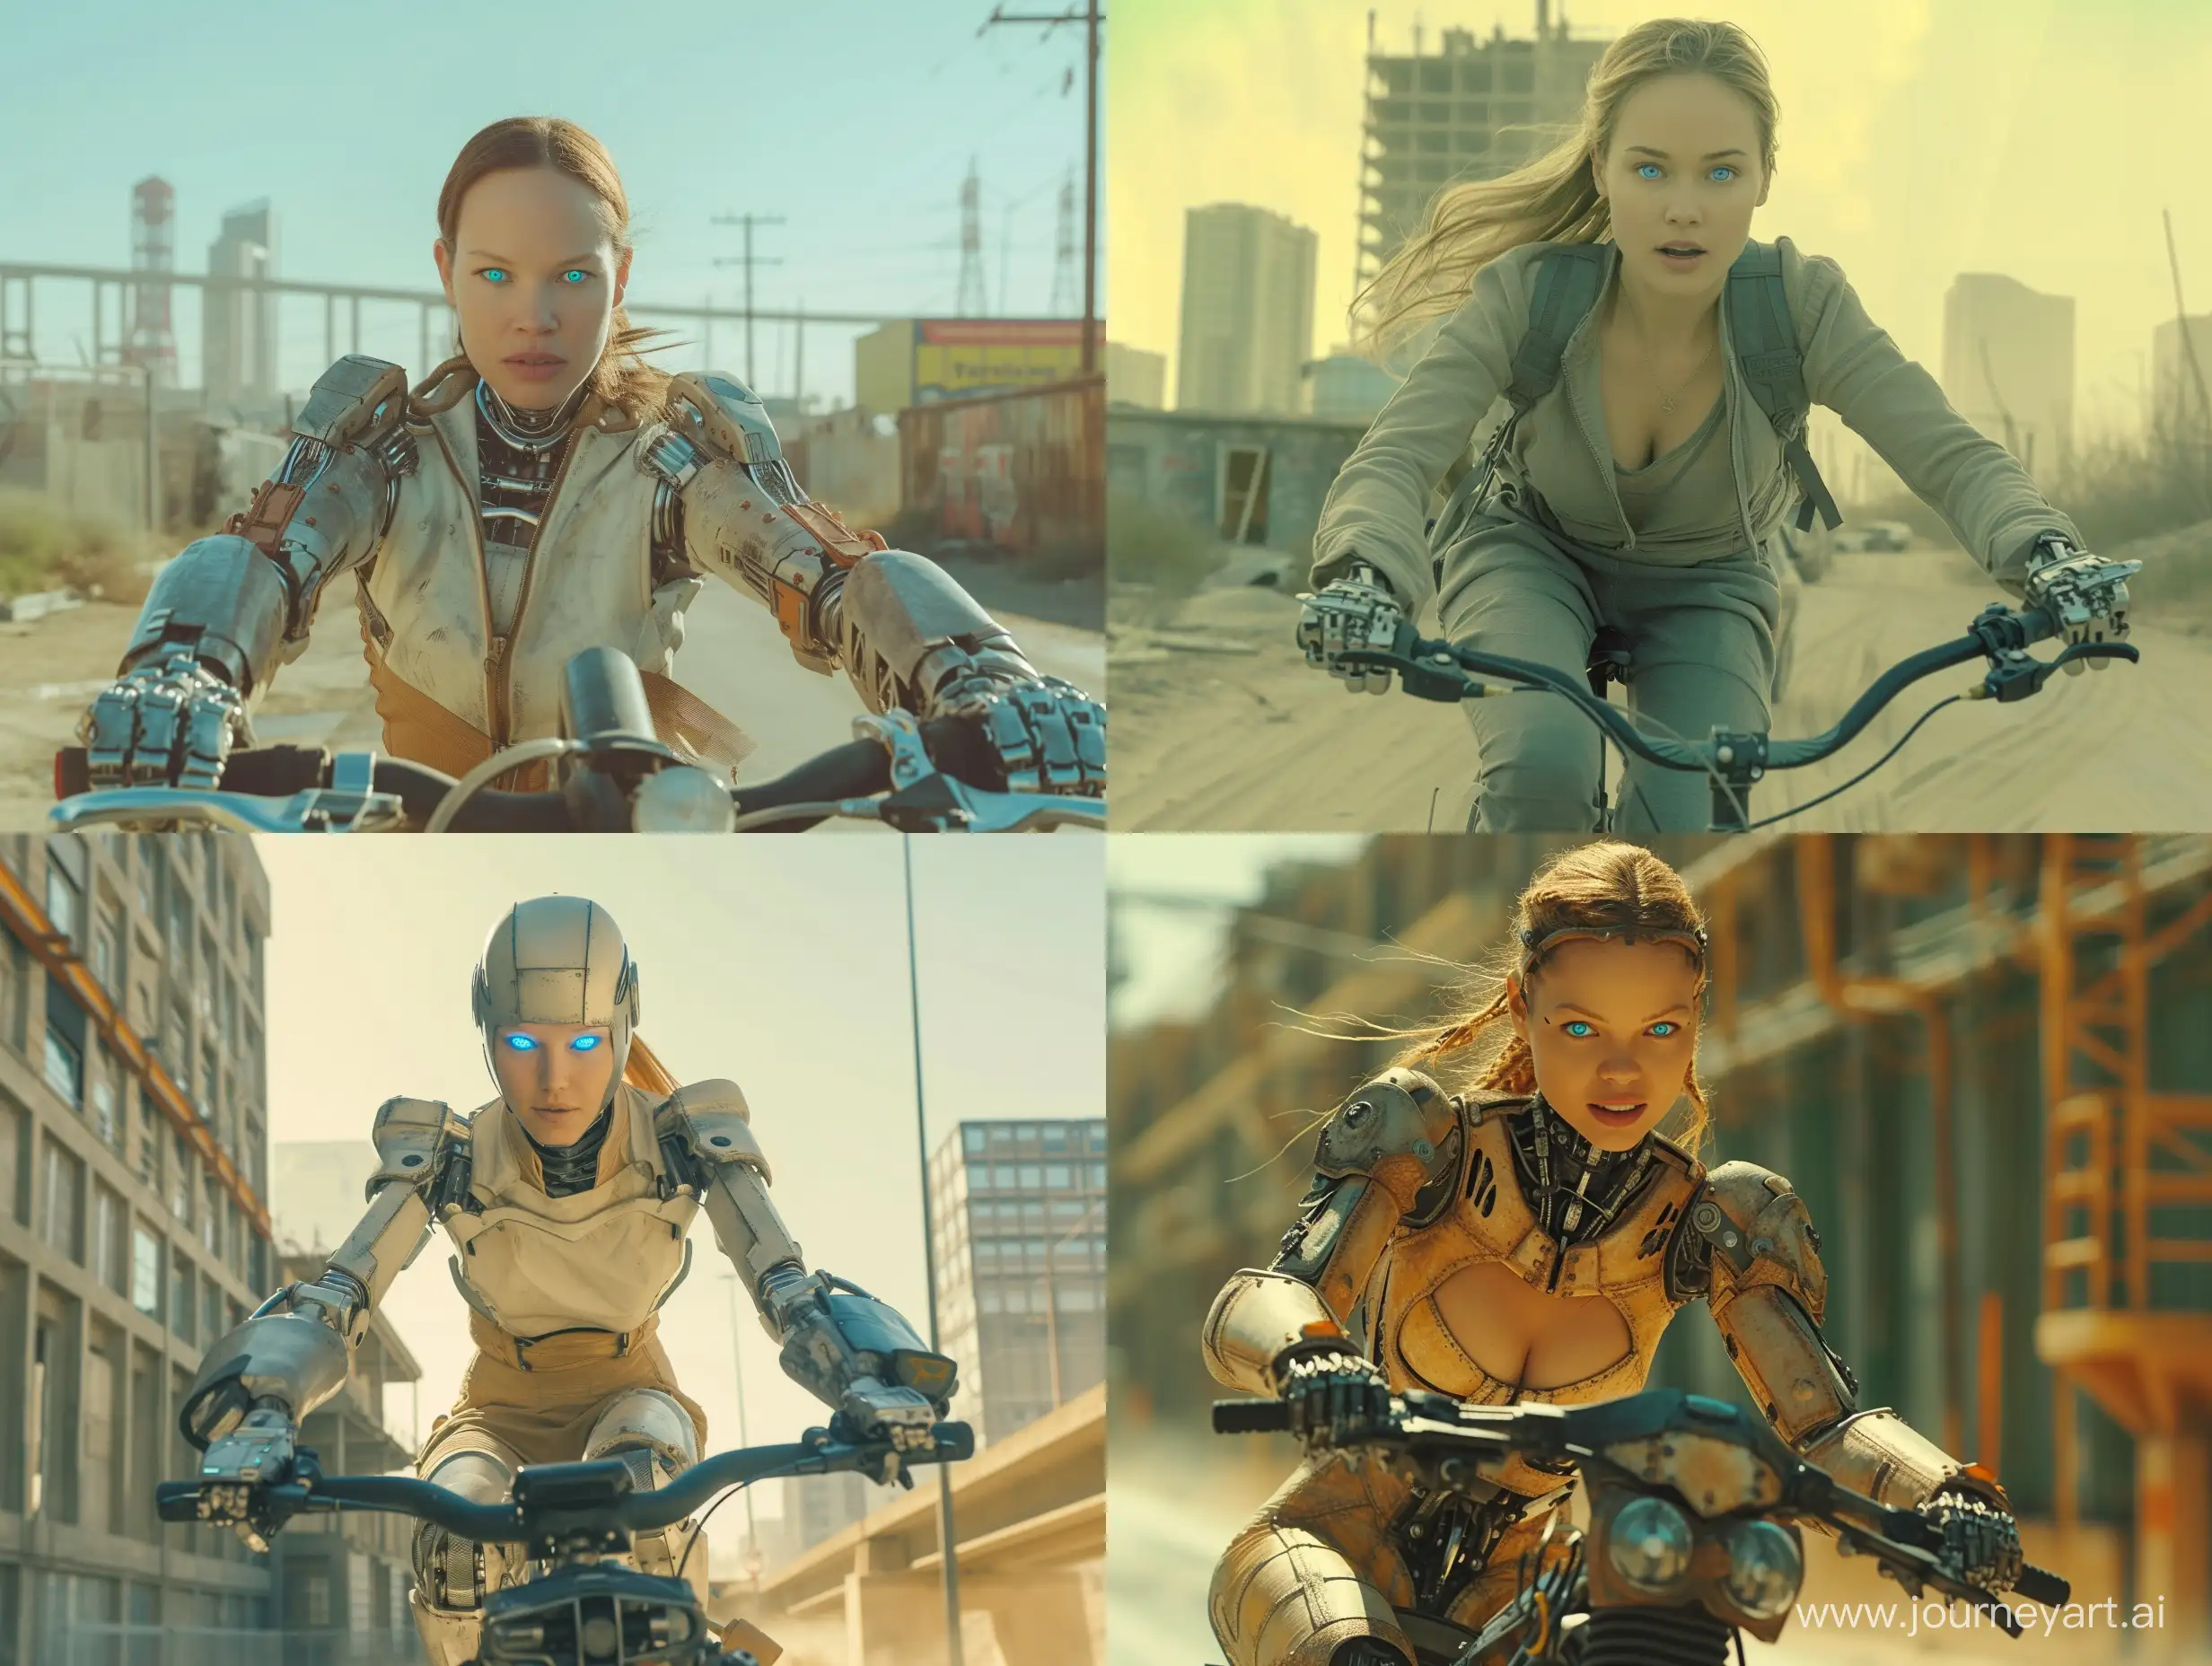 Nostalgic-Cyborg-Woman-Riding-Bike-in-Dystopian-Cityscape